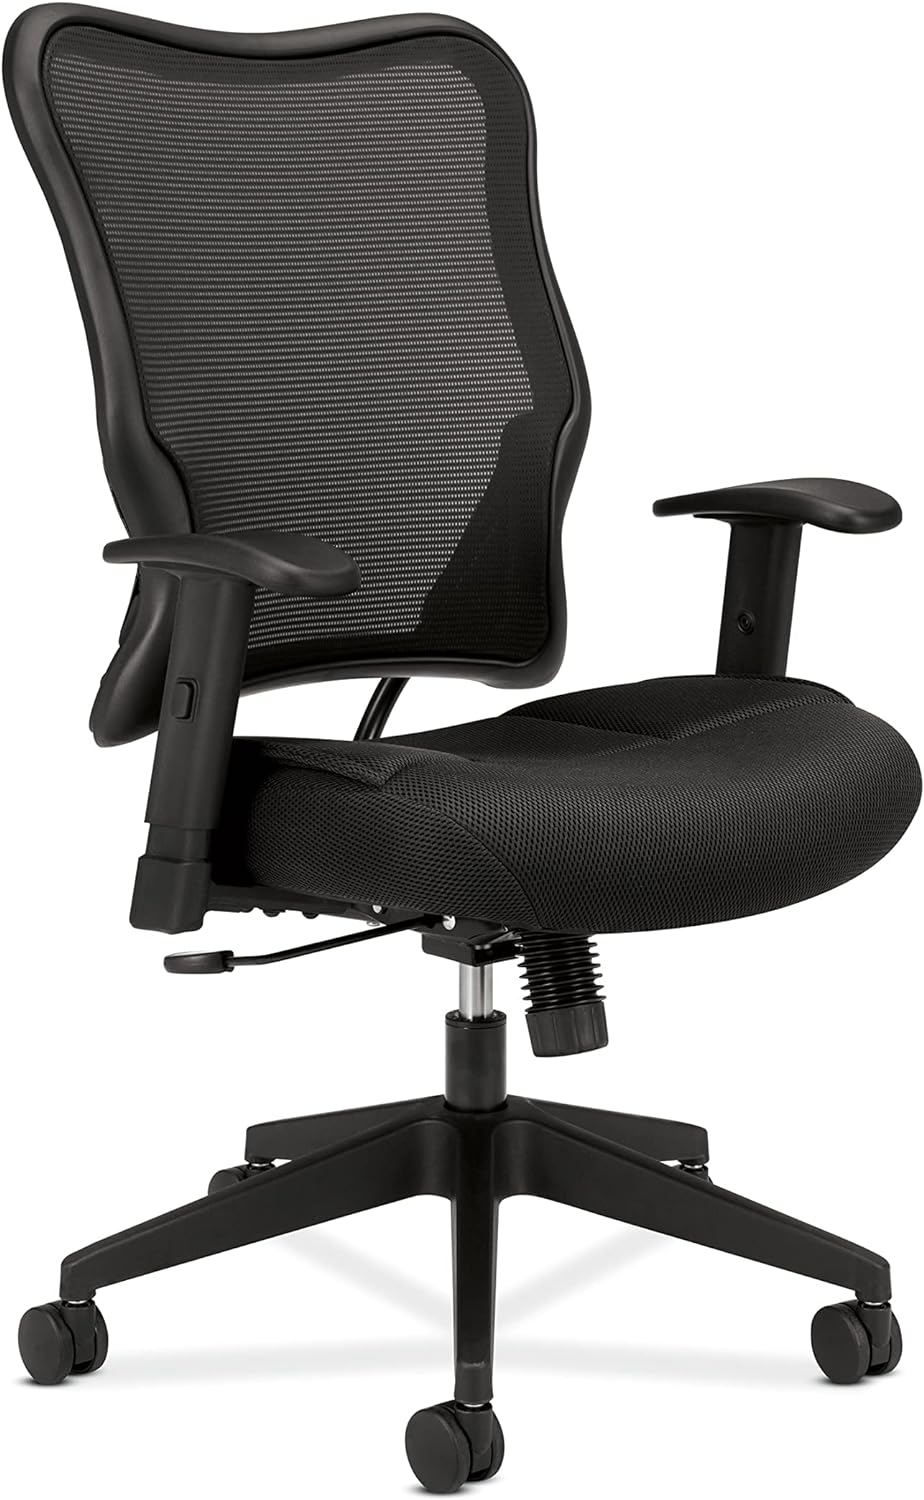 HON Wave Office Chair High Back Mesh Ergonomic Computer Desk Chair - Adjustable Arms & Pneumatic Seat Height, Synchro-Tilt Tension Lock Recline, Comfortable Cushion, 360 Swivel Rolling Wheels - Black